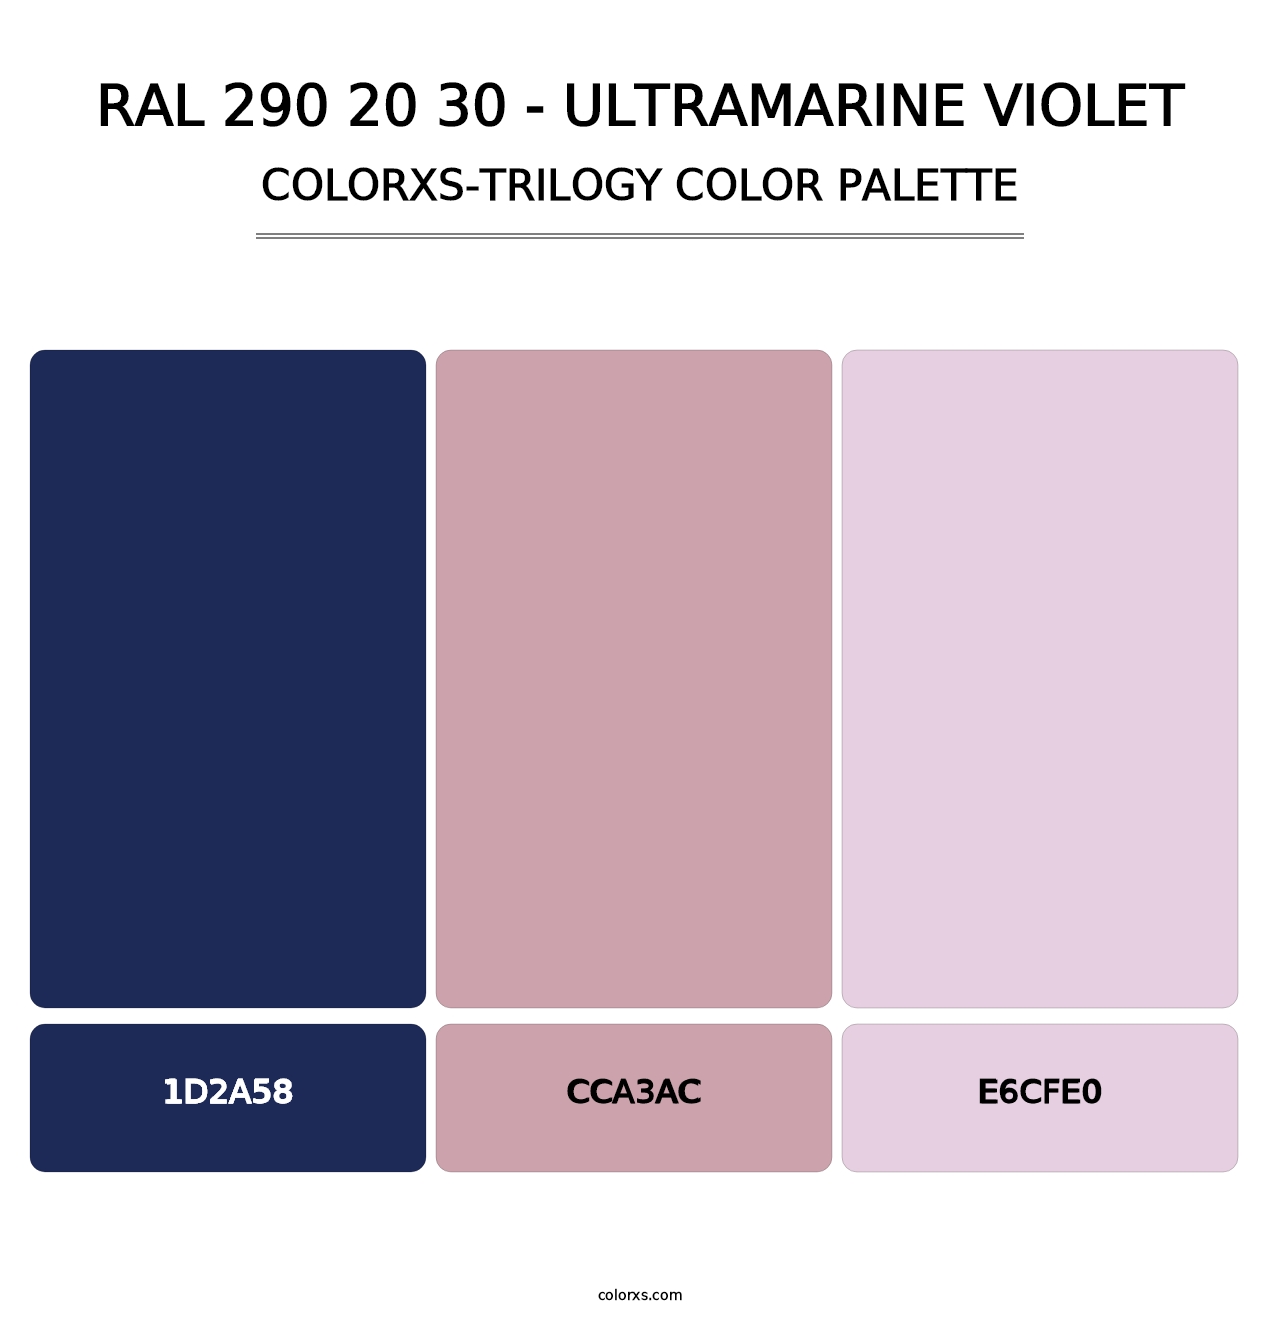 RAL 290 20 30 - Ultramarine Violet - Colorxs Trilogy Palette